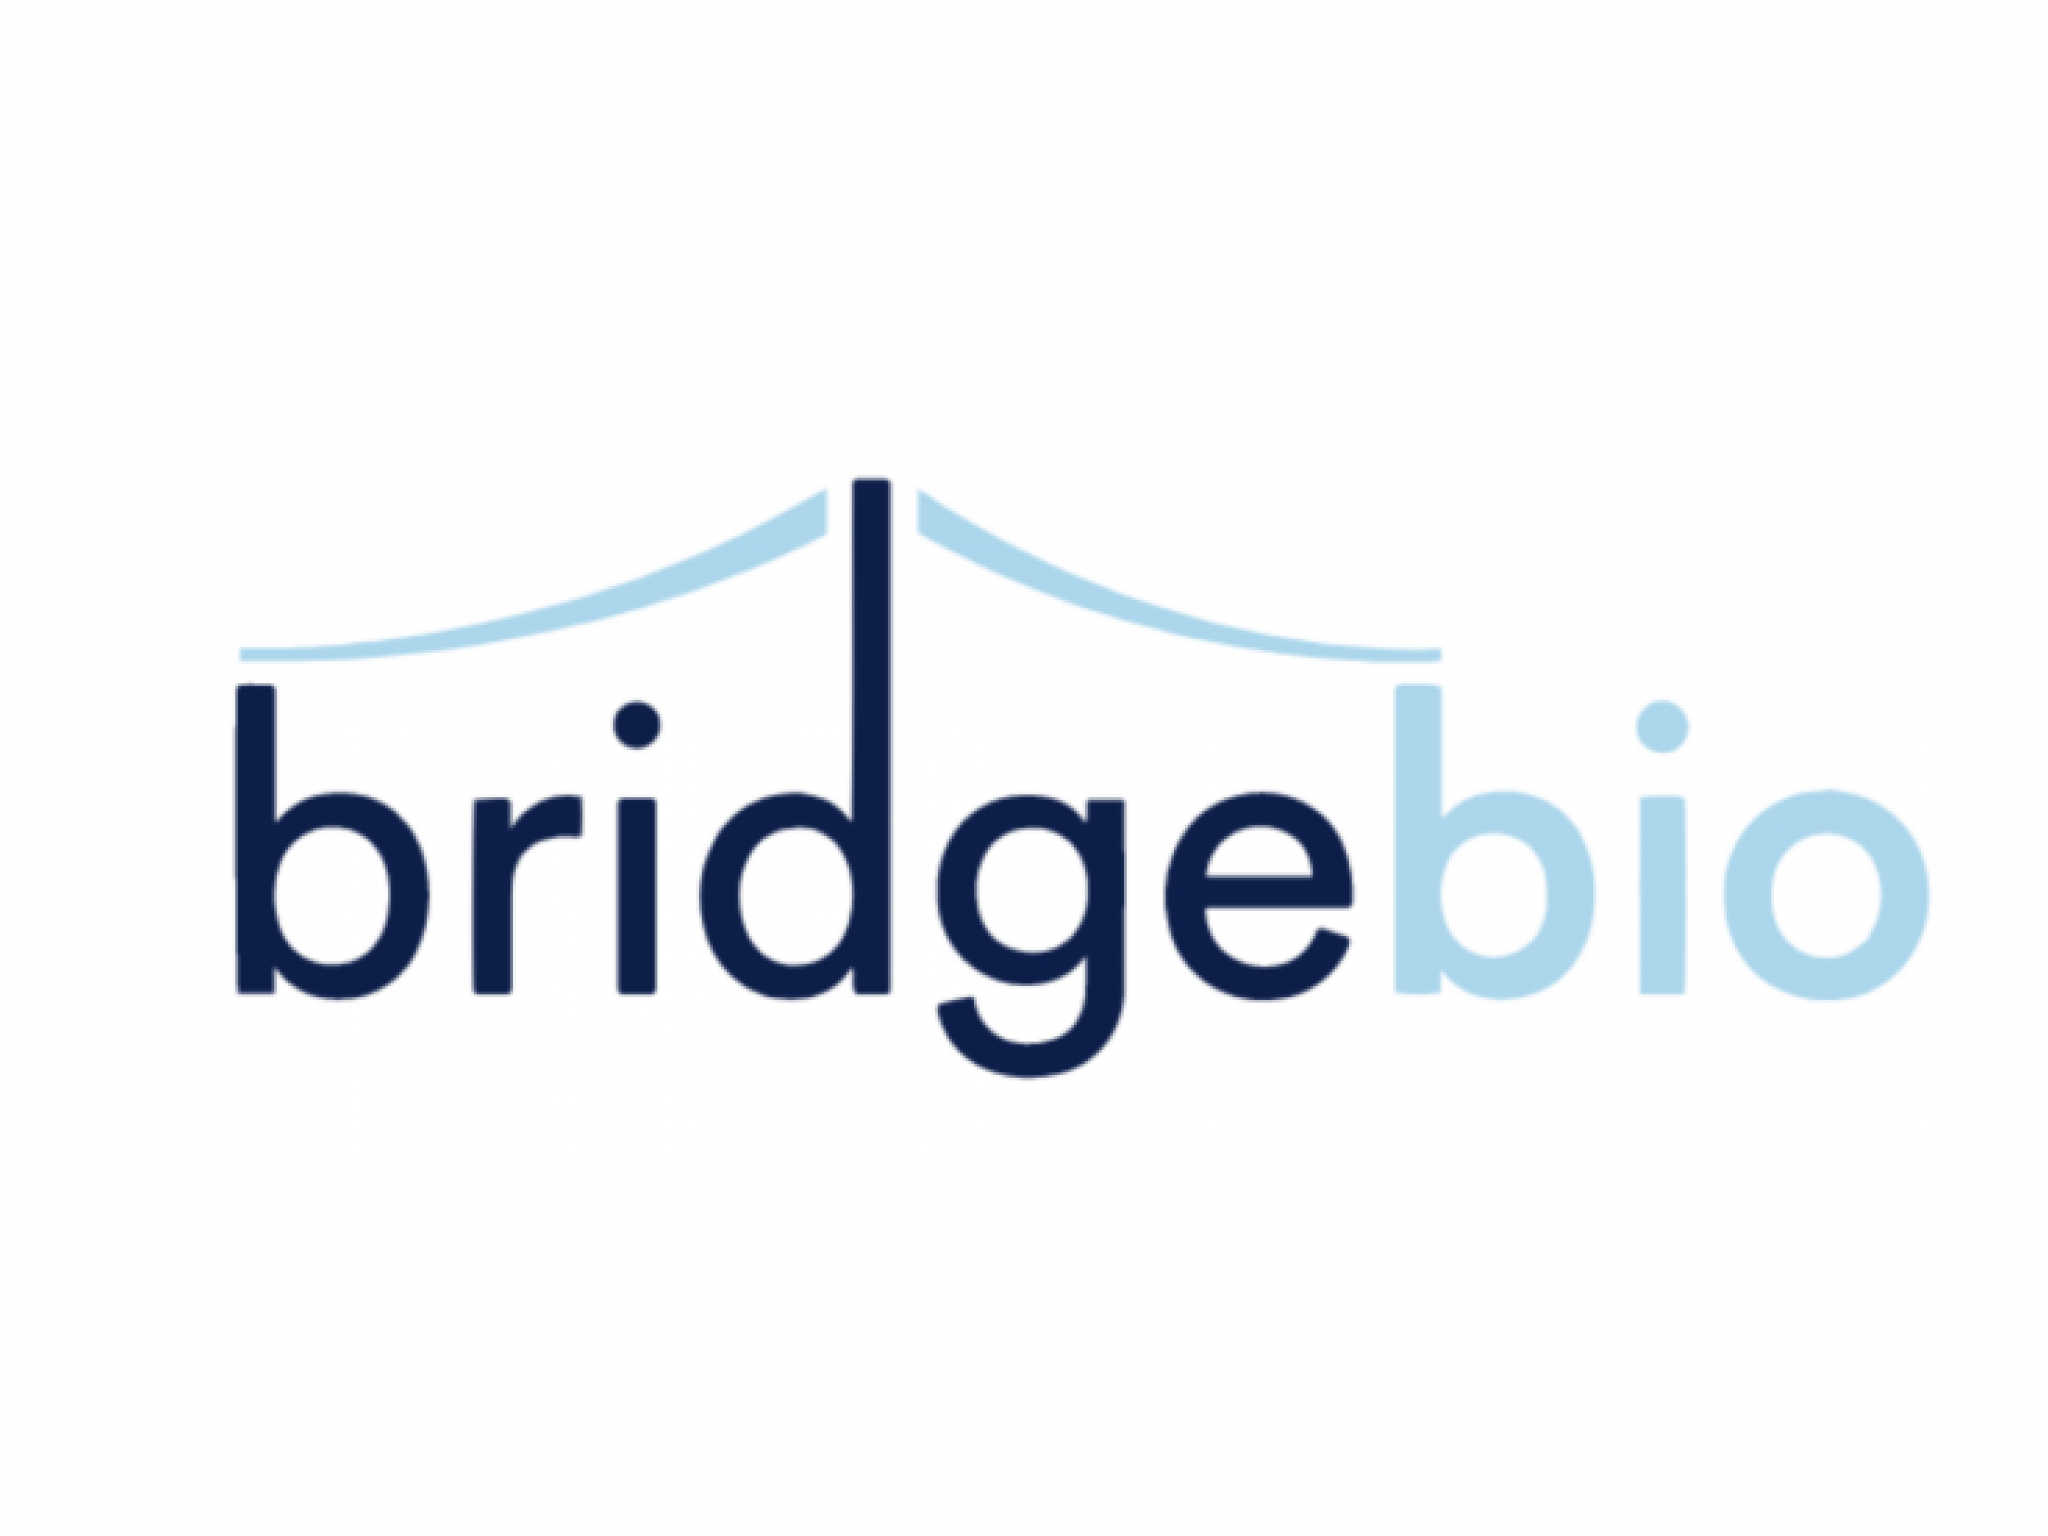  whats-going-on-with-bridgebio-pharma-stock-on-monday 